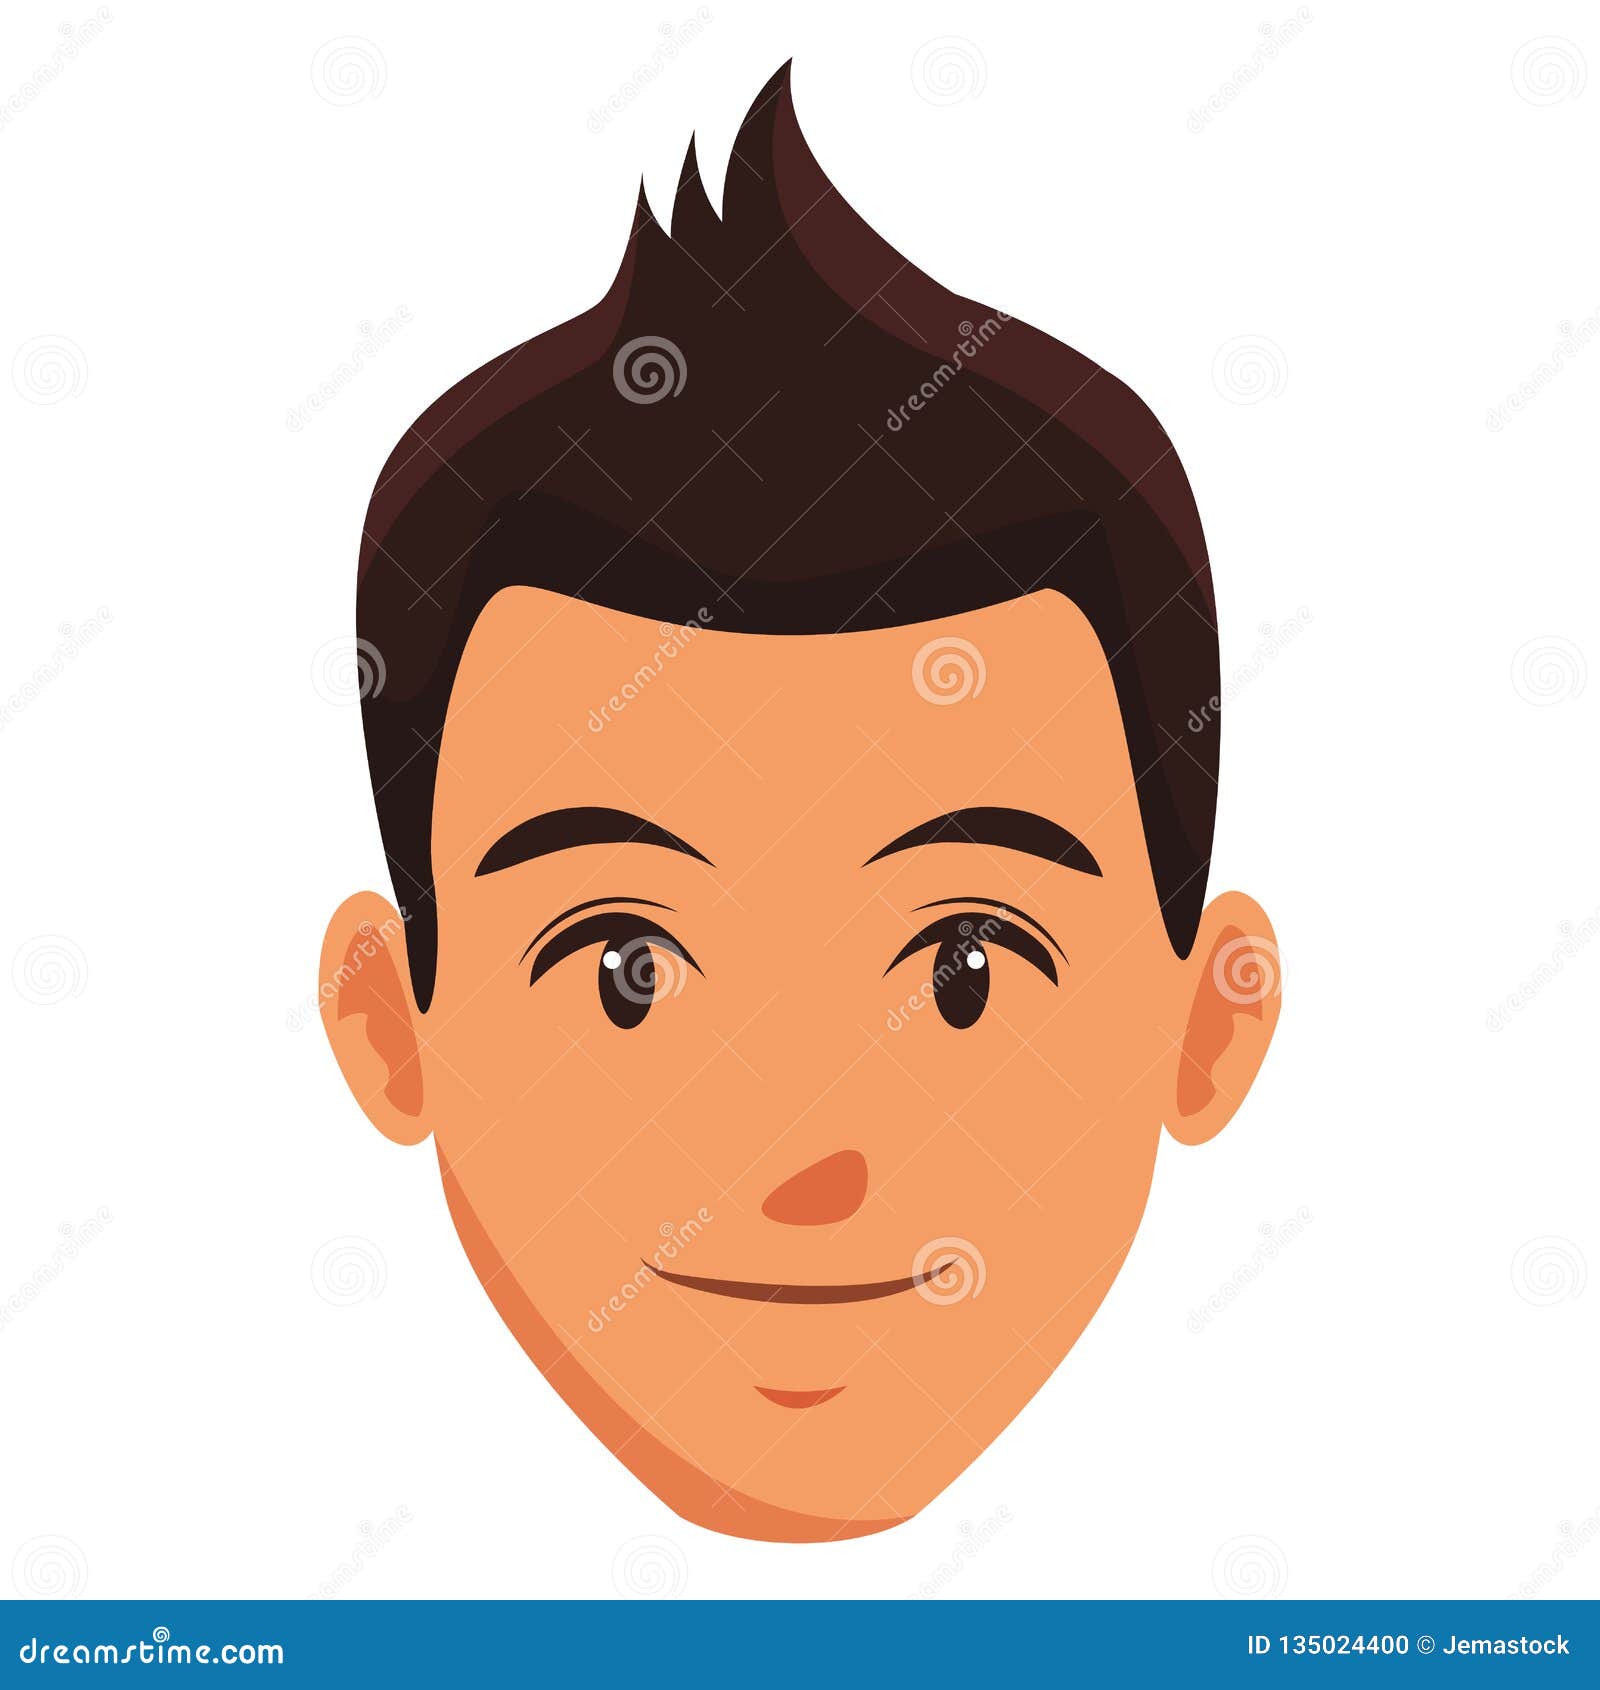 Cute man face cartoon stock vector. Illustration of happy - 135024400